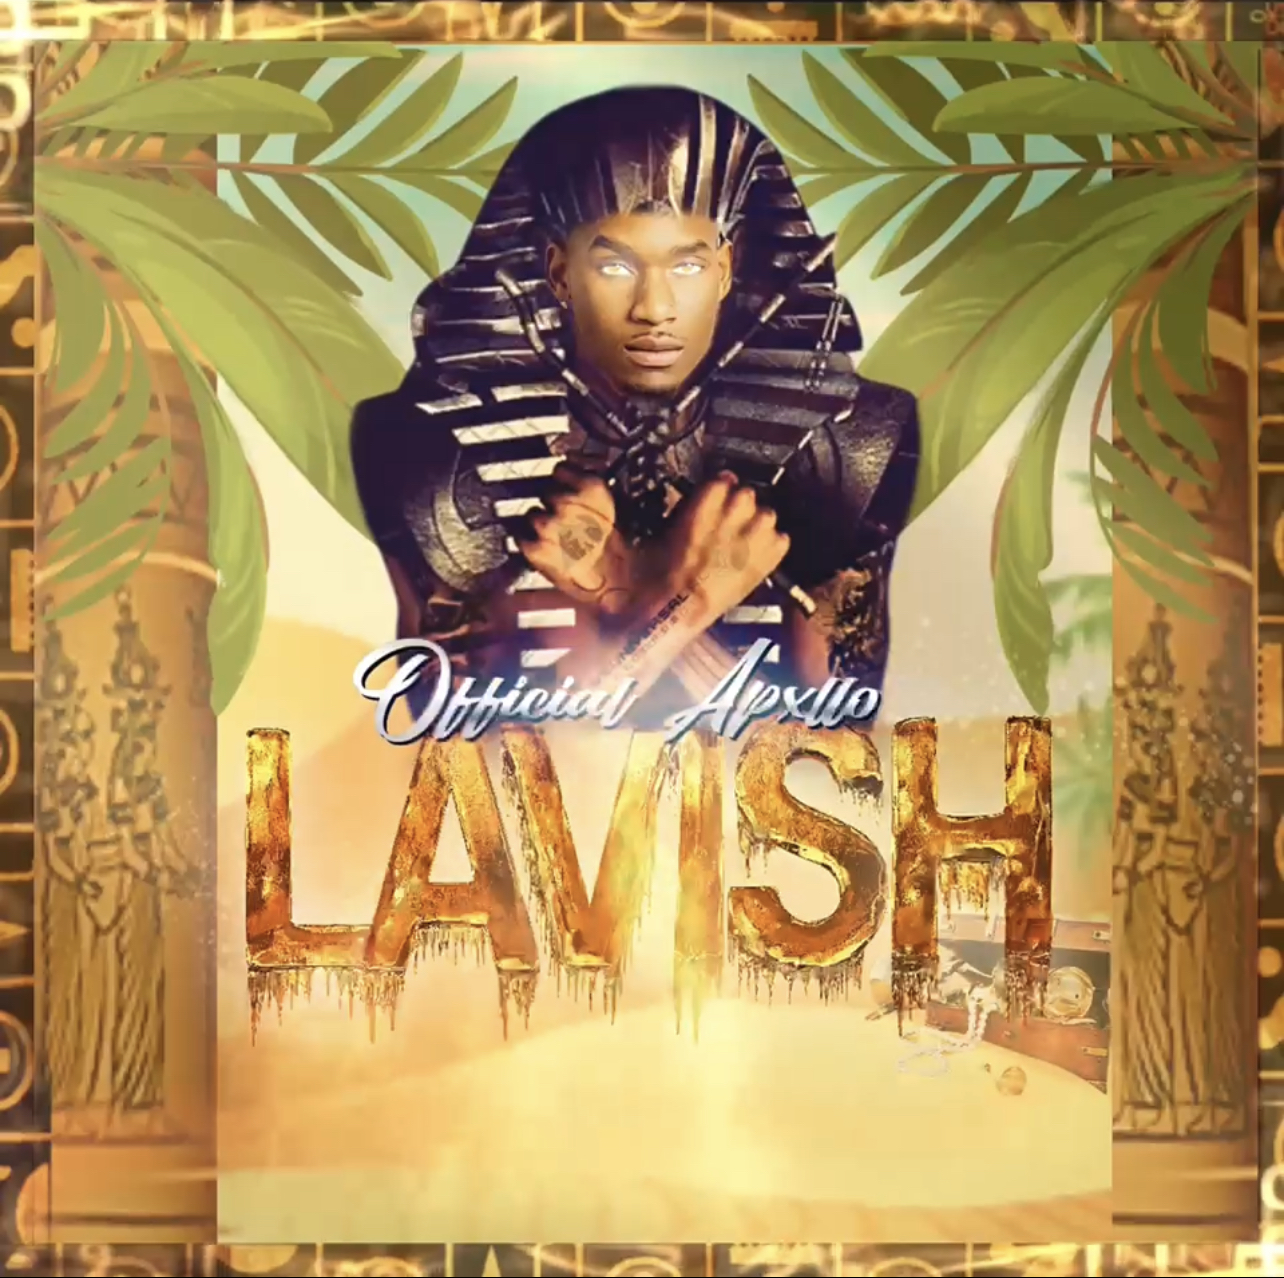 New Music From APXLLO “Lavish” ( Official Audio ) @Official_Apxllo